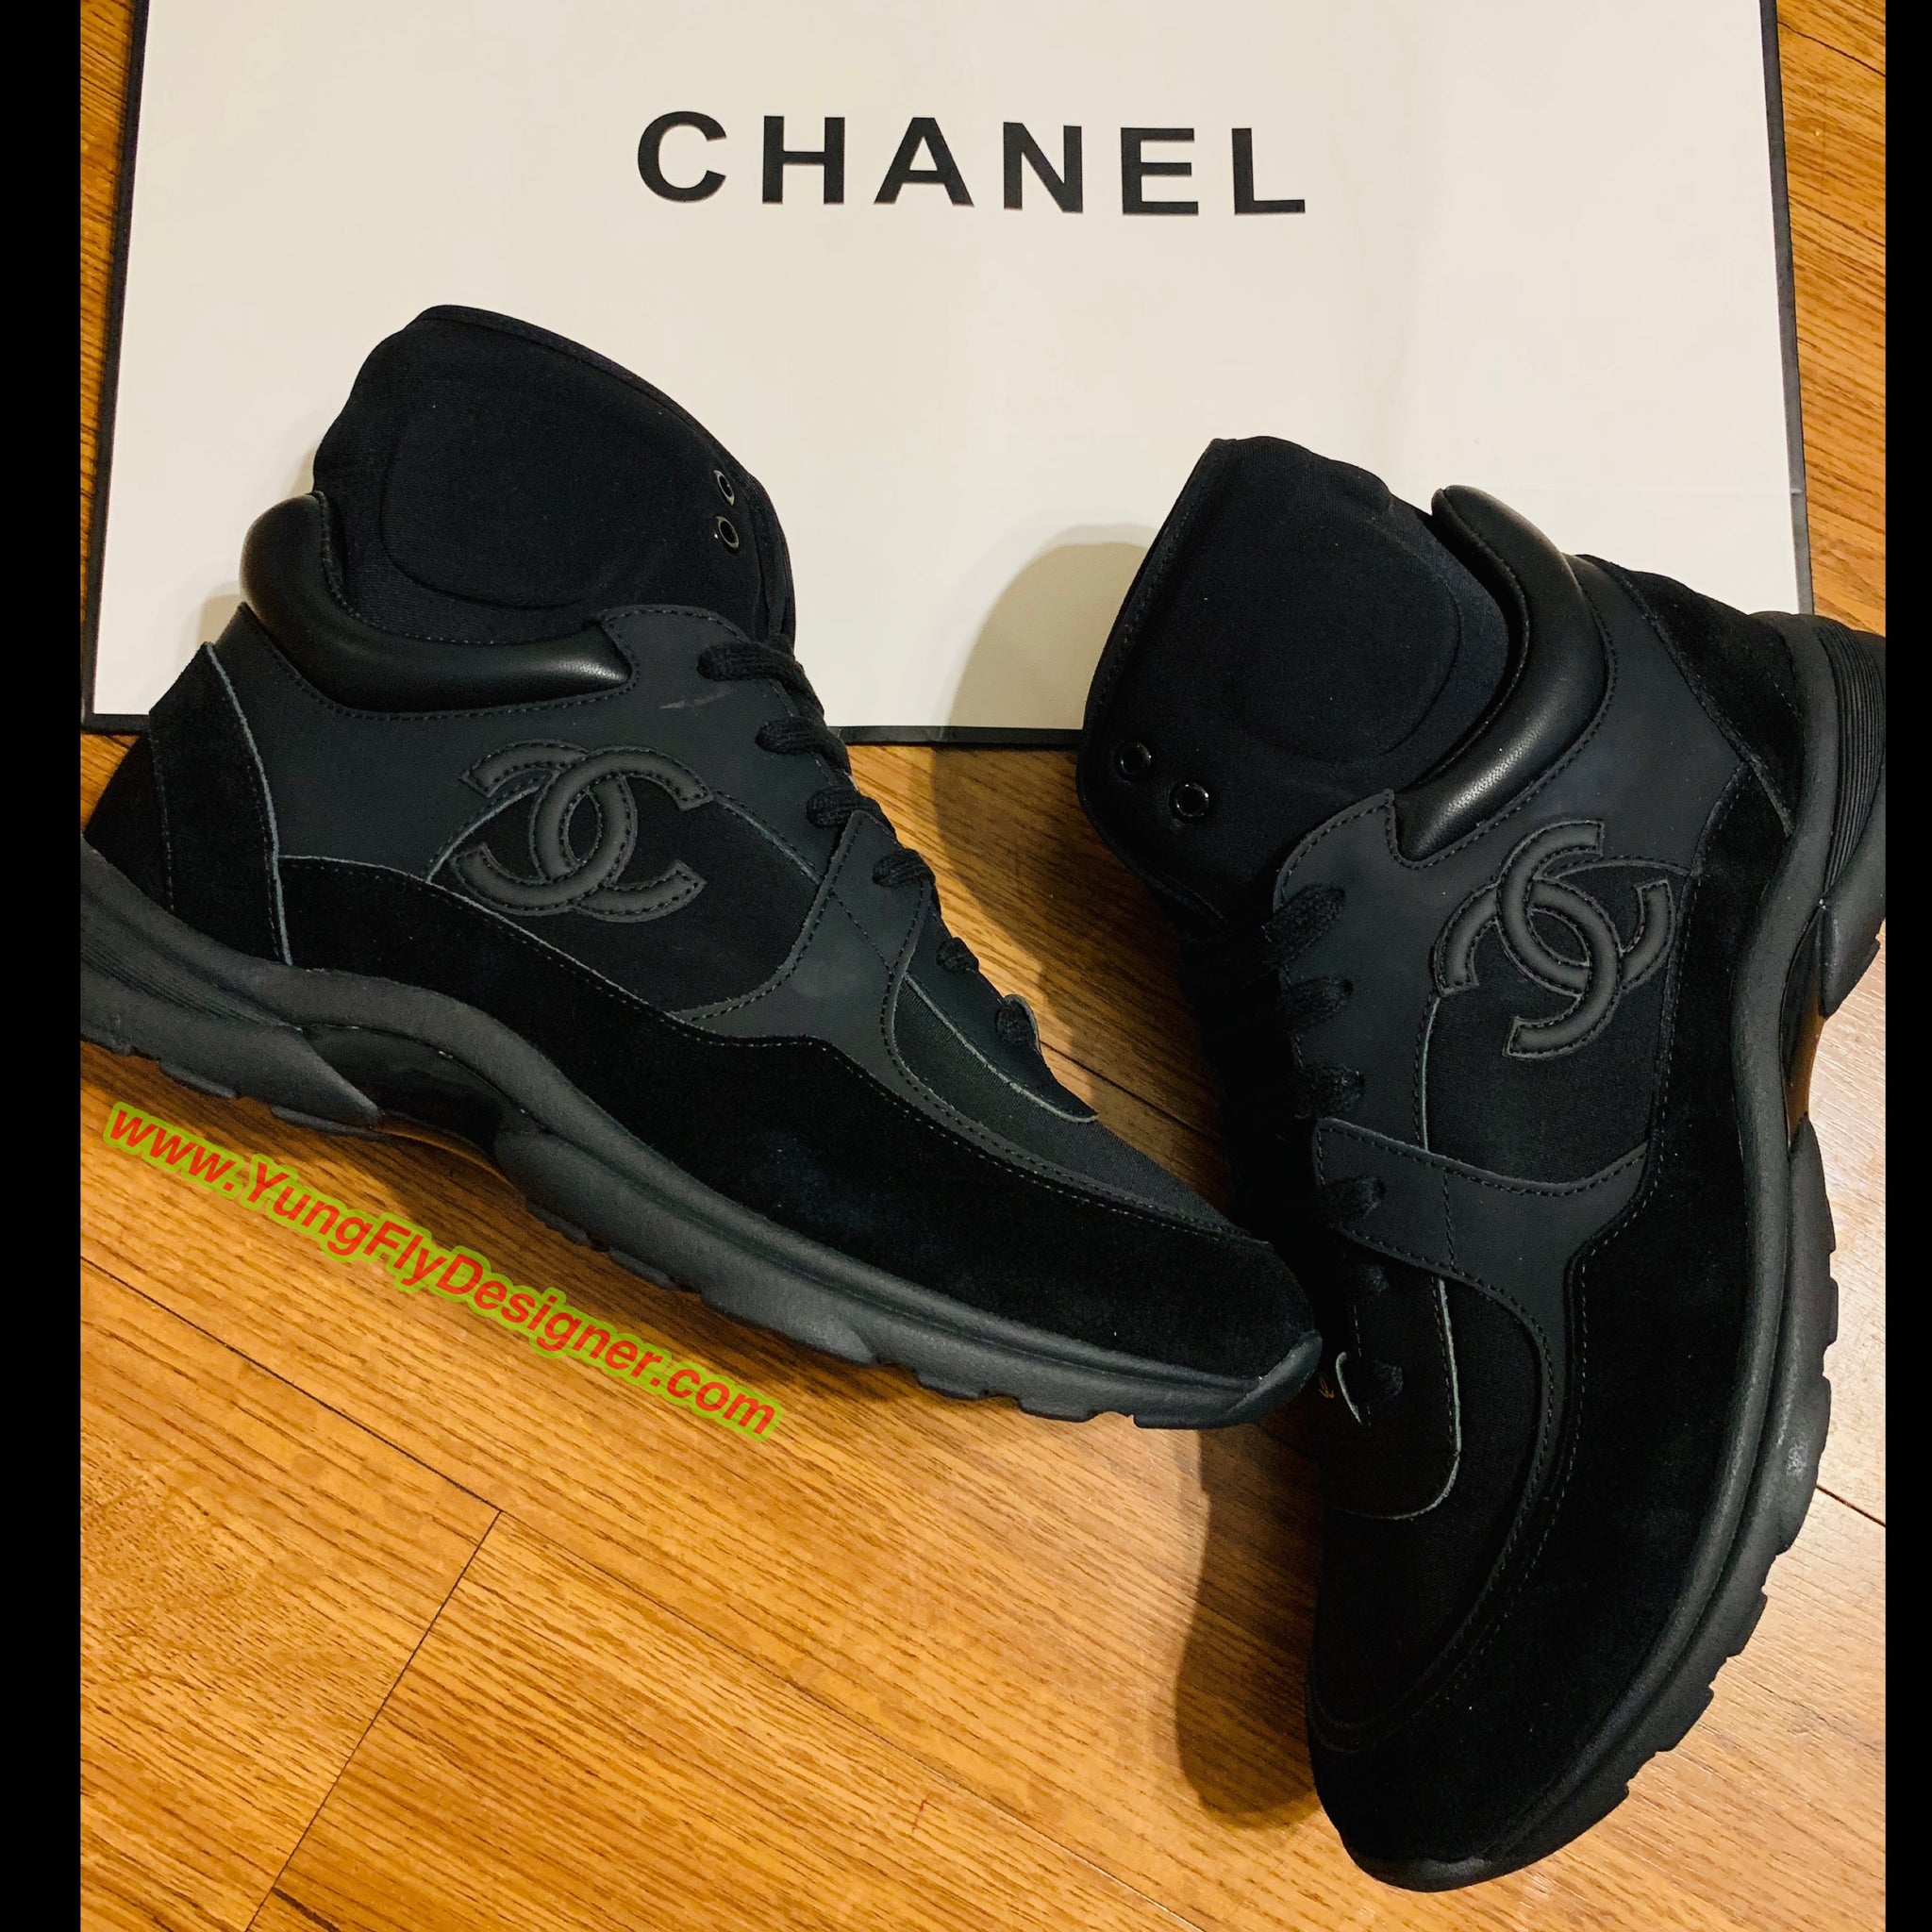 Black High Top Chanel Sneaker - $300.00 